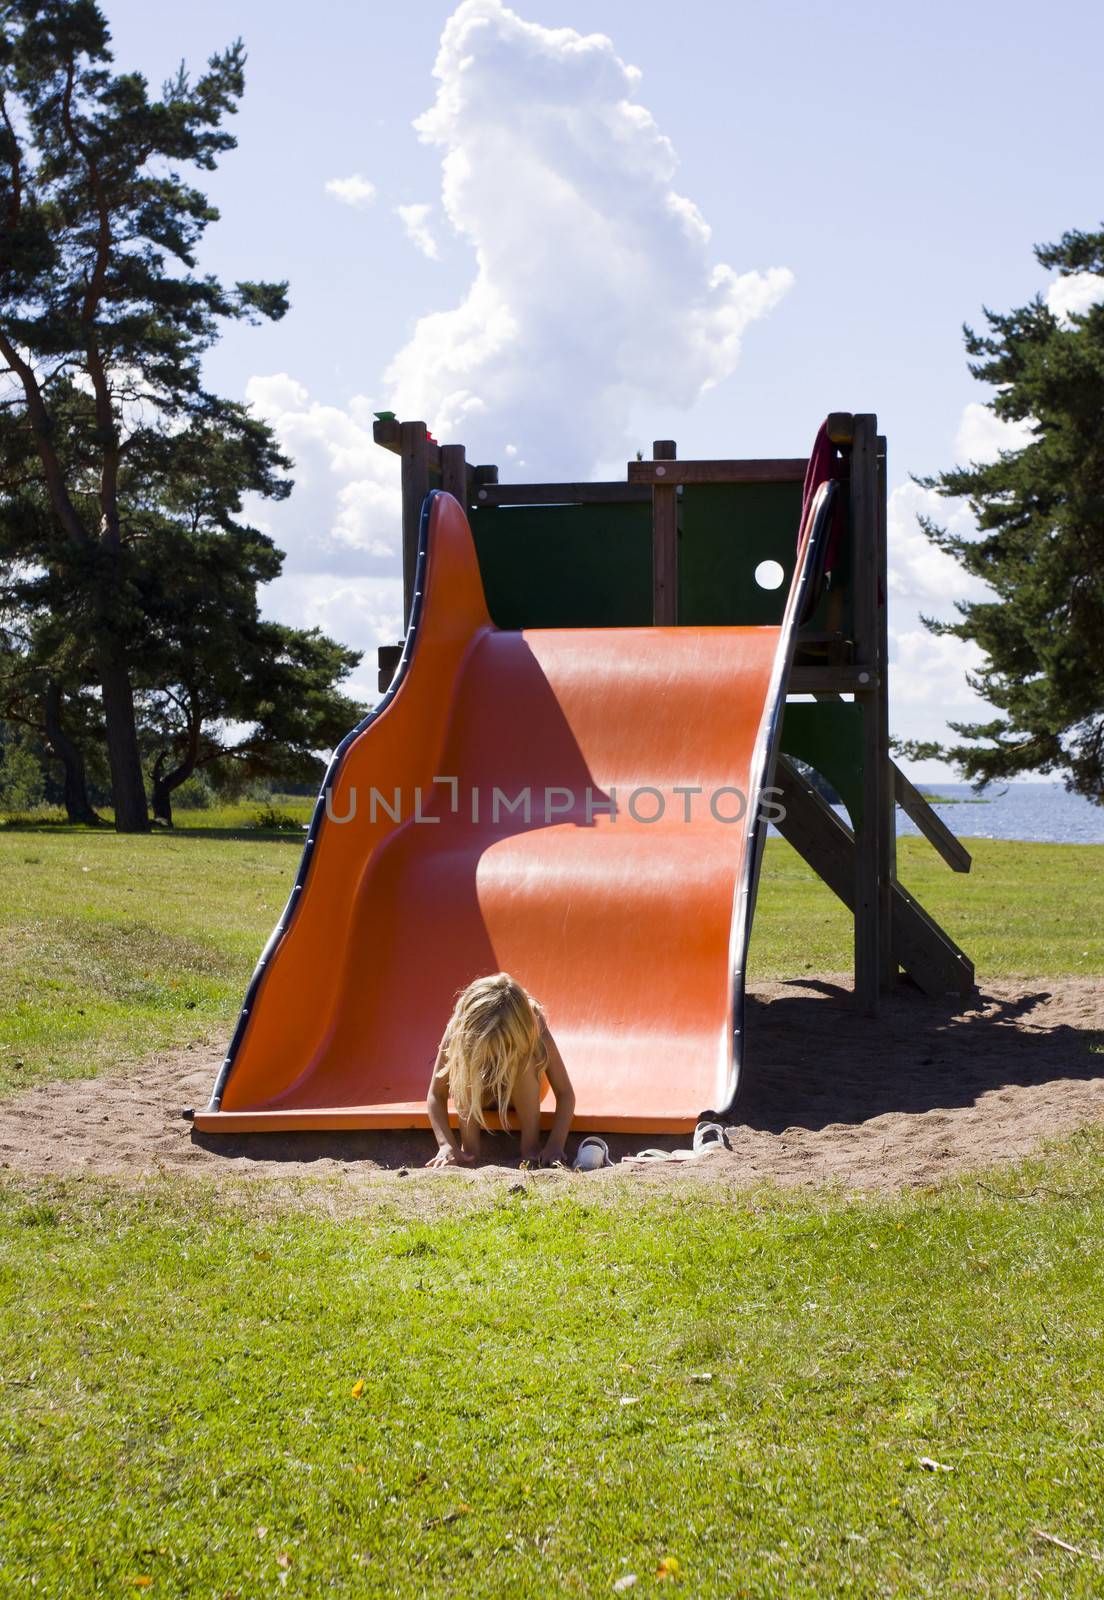 Sad child at playground by annems